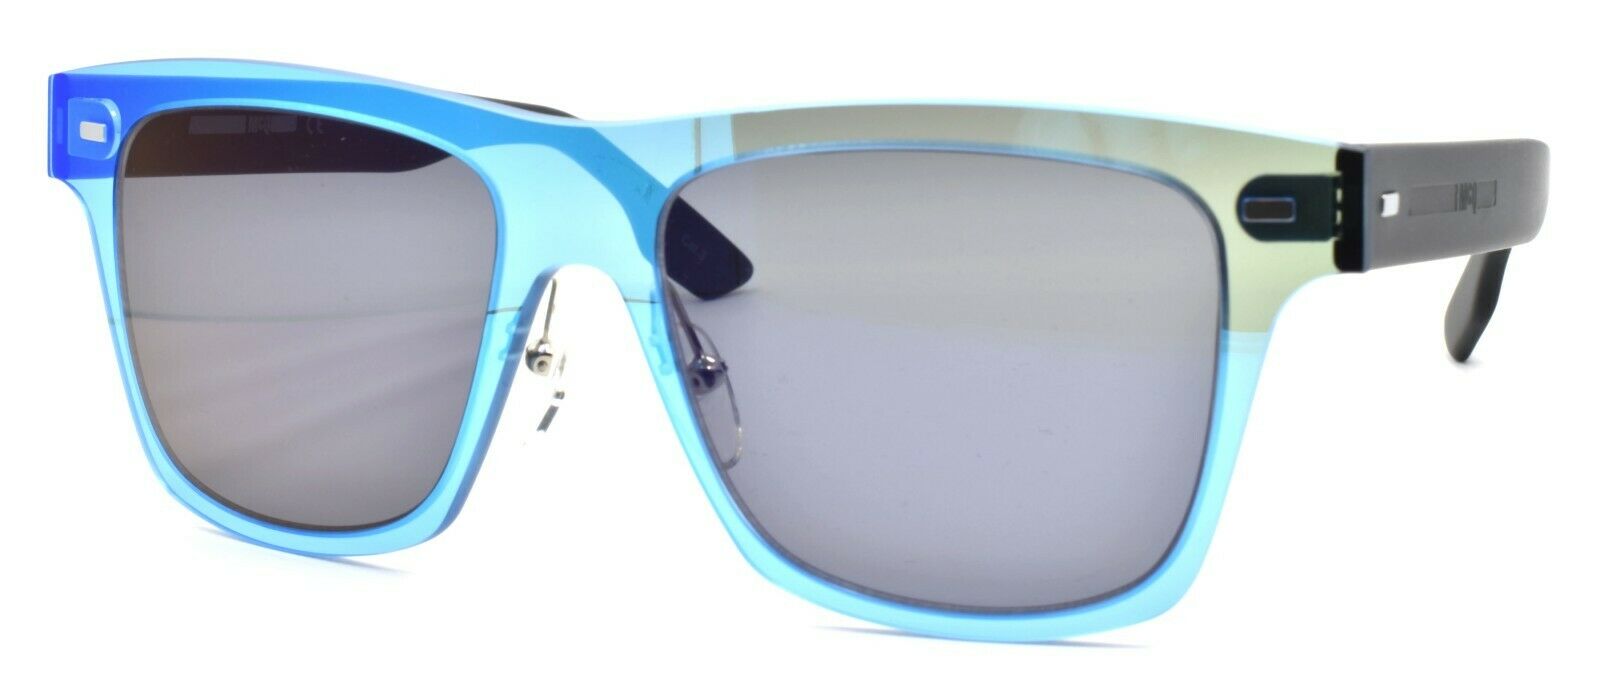 1-McQ Alexander McQueen MQ008S 008 Unisex Sunglasses Blue & Black / Smoke-889652001555-IKSpecs